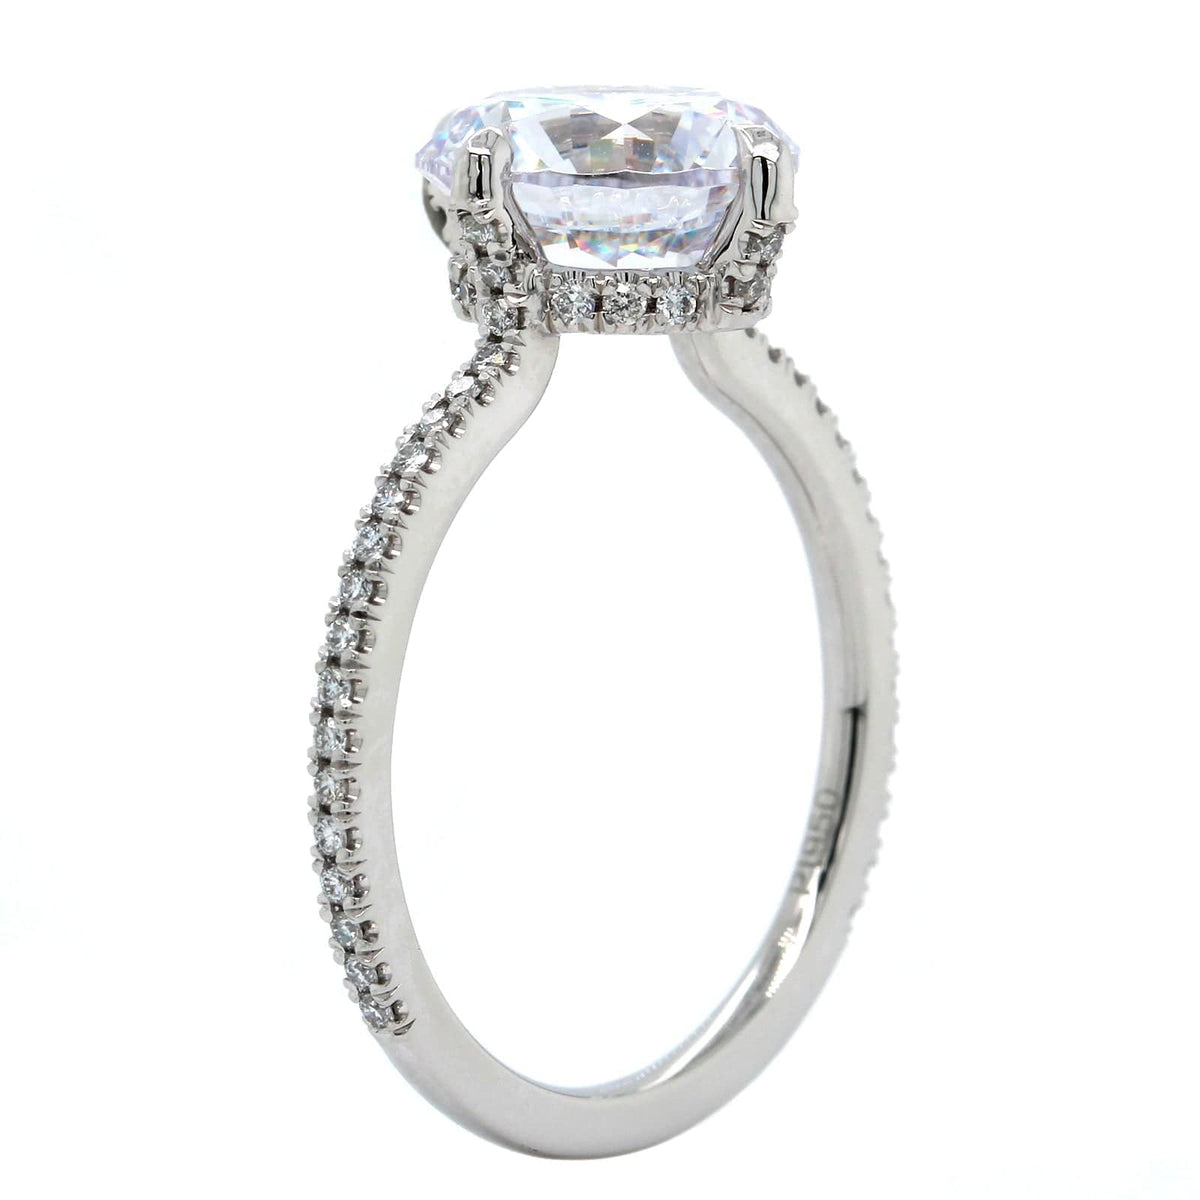 Platinum Compass Prong Diamond Engagement Ring Setting, Platinum, Long's Jewelers